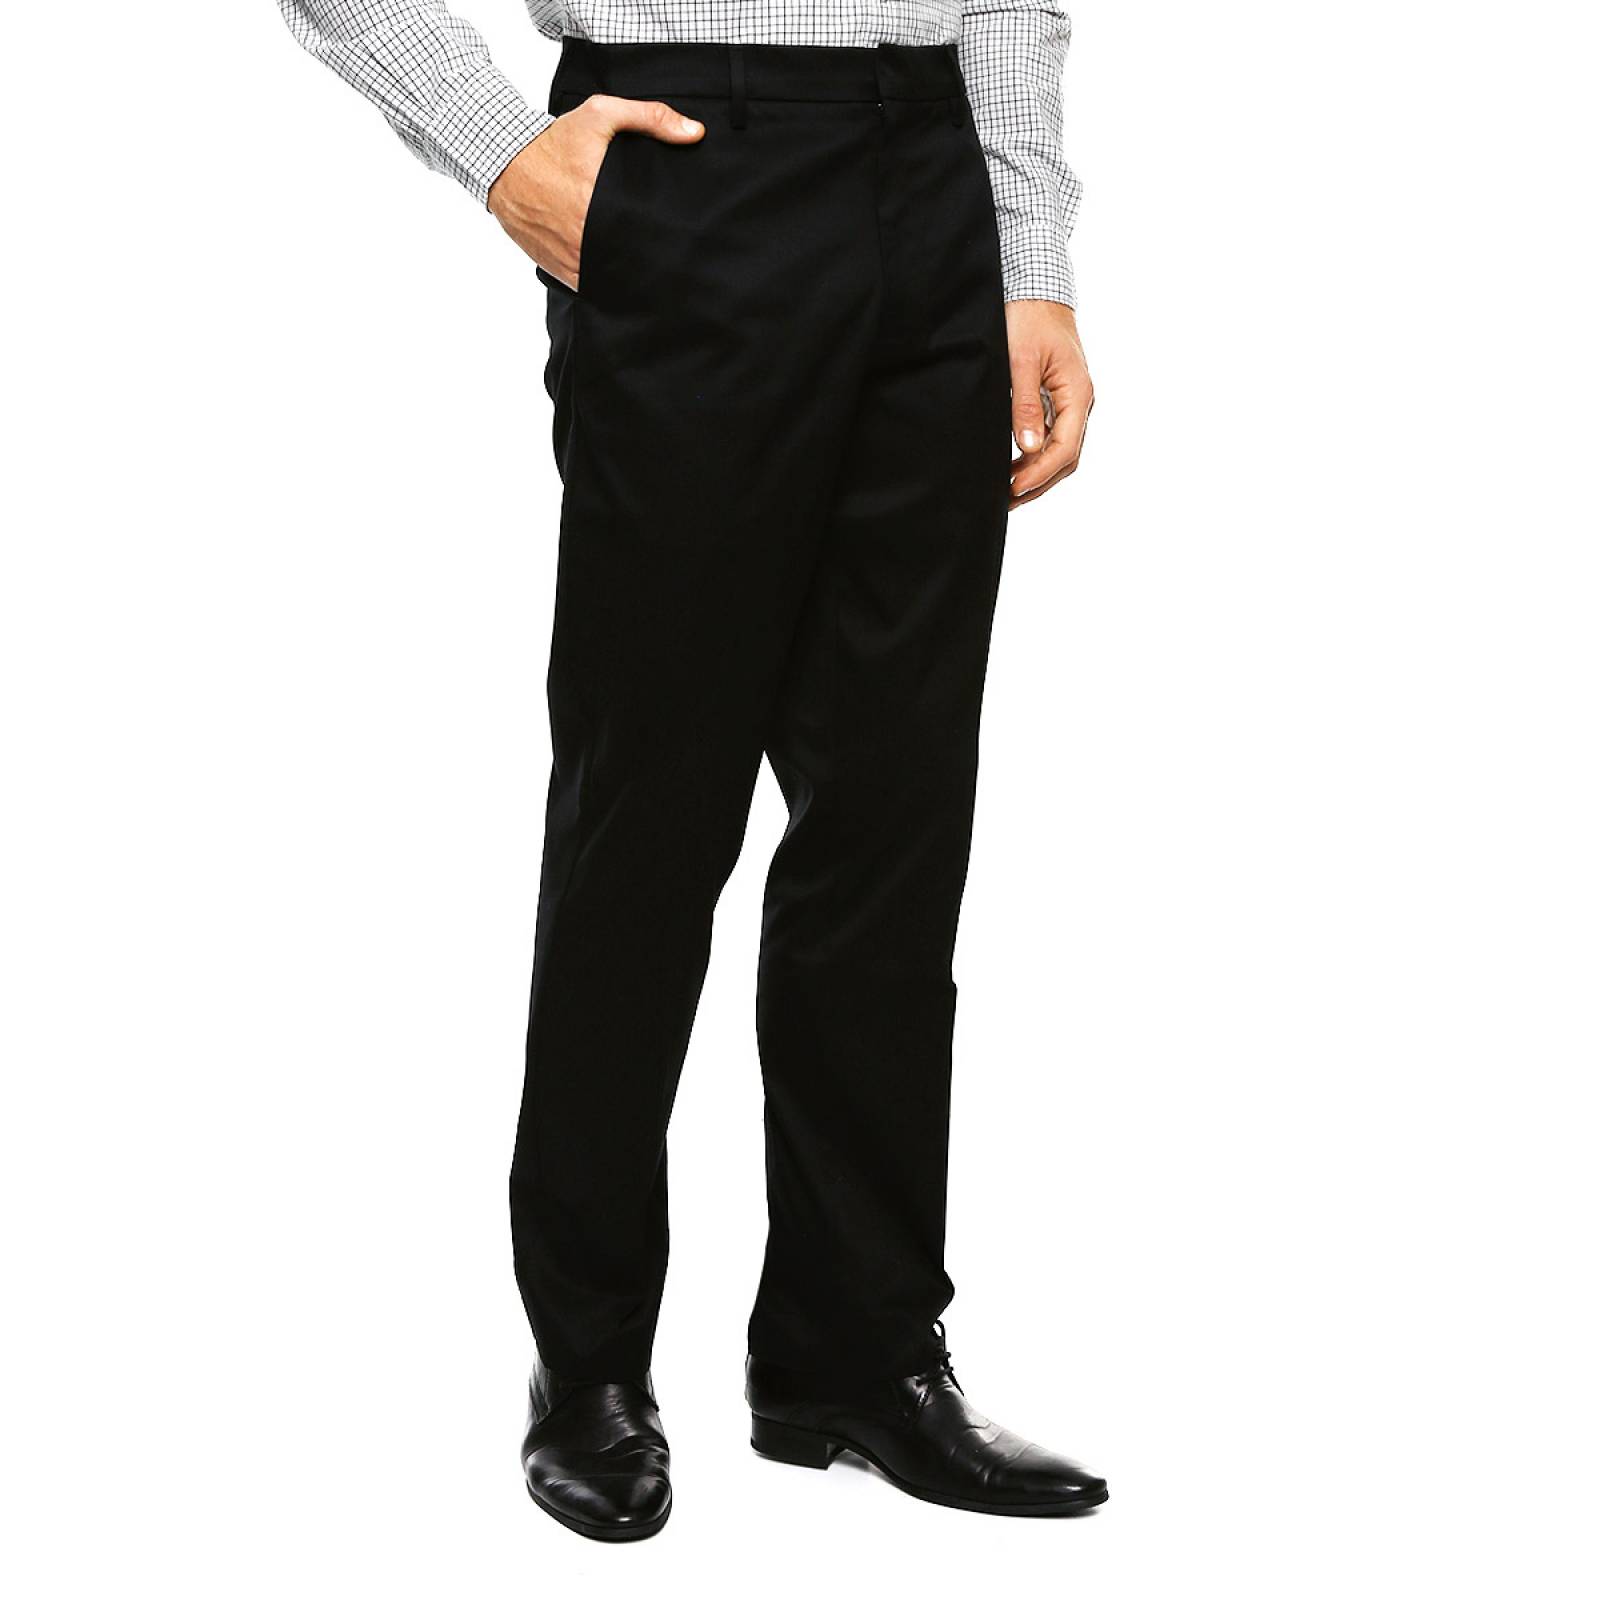 Pantalón Aight Fit Negro para Caballero